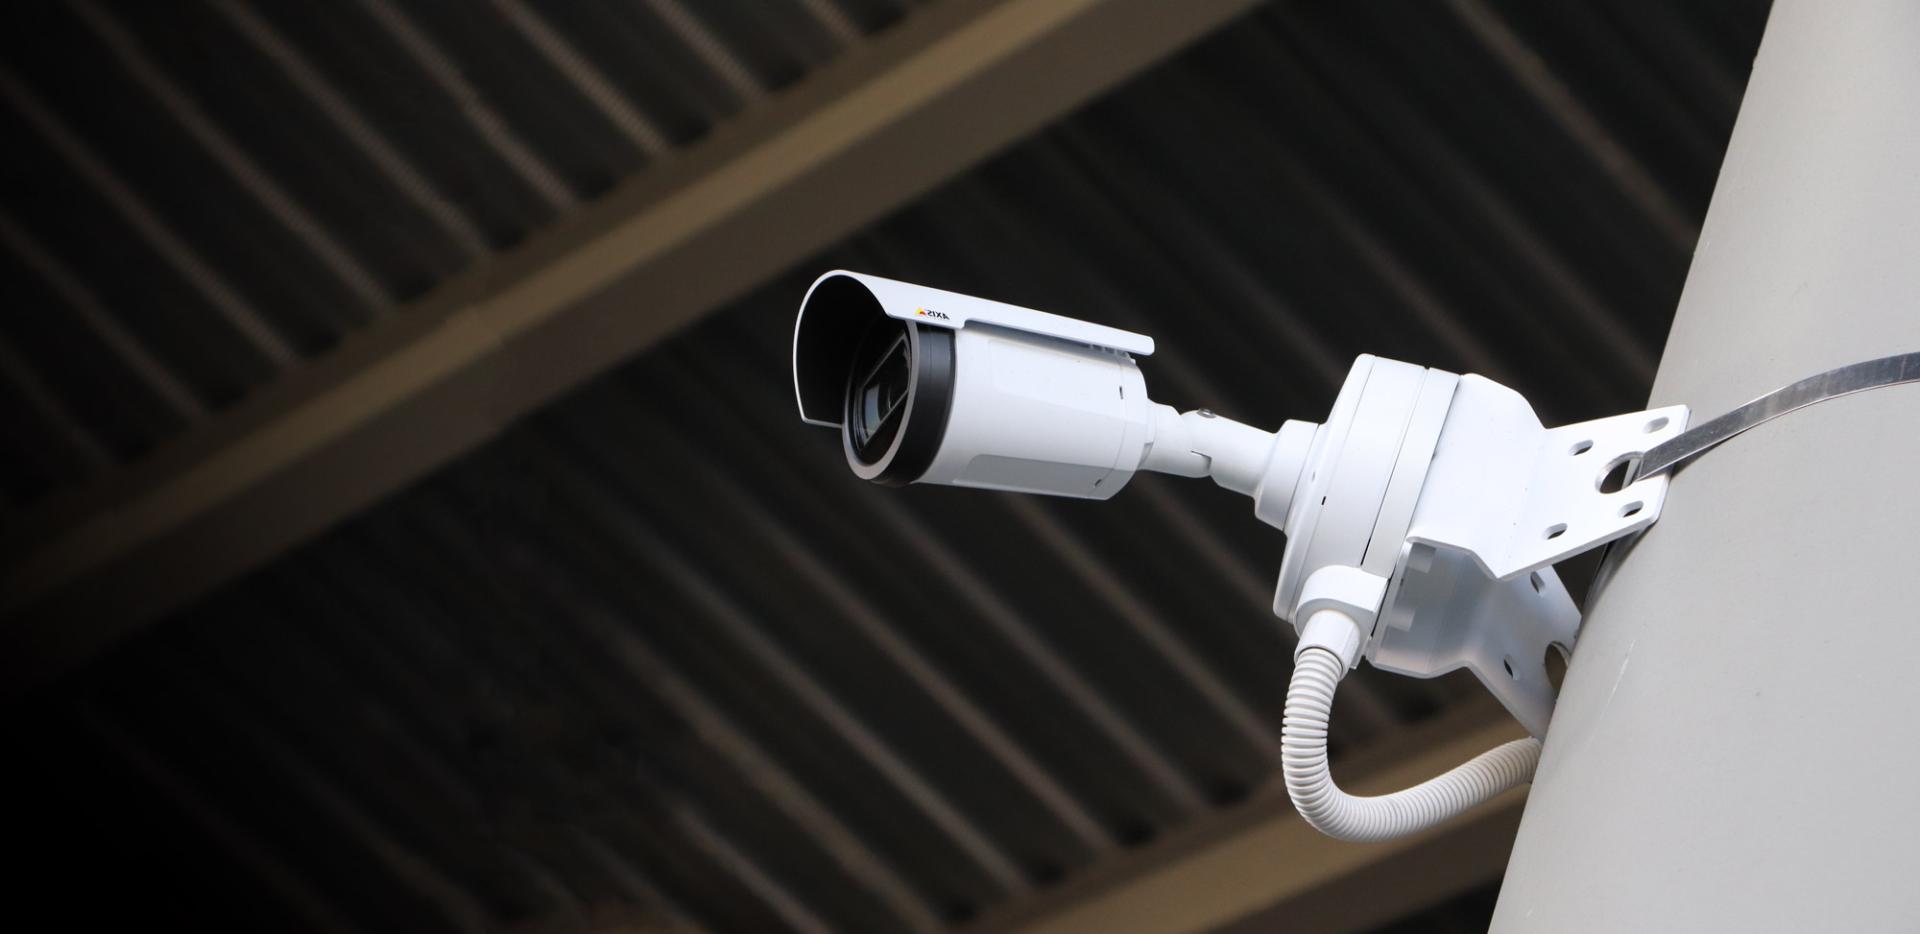 CCTV Camera mounted to a pole - Advanced Security